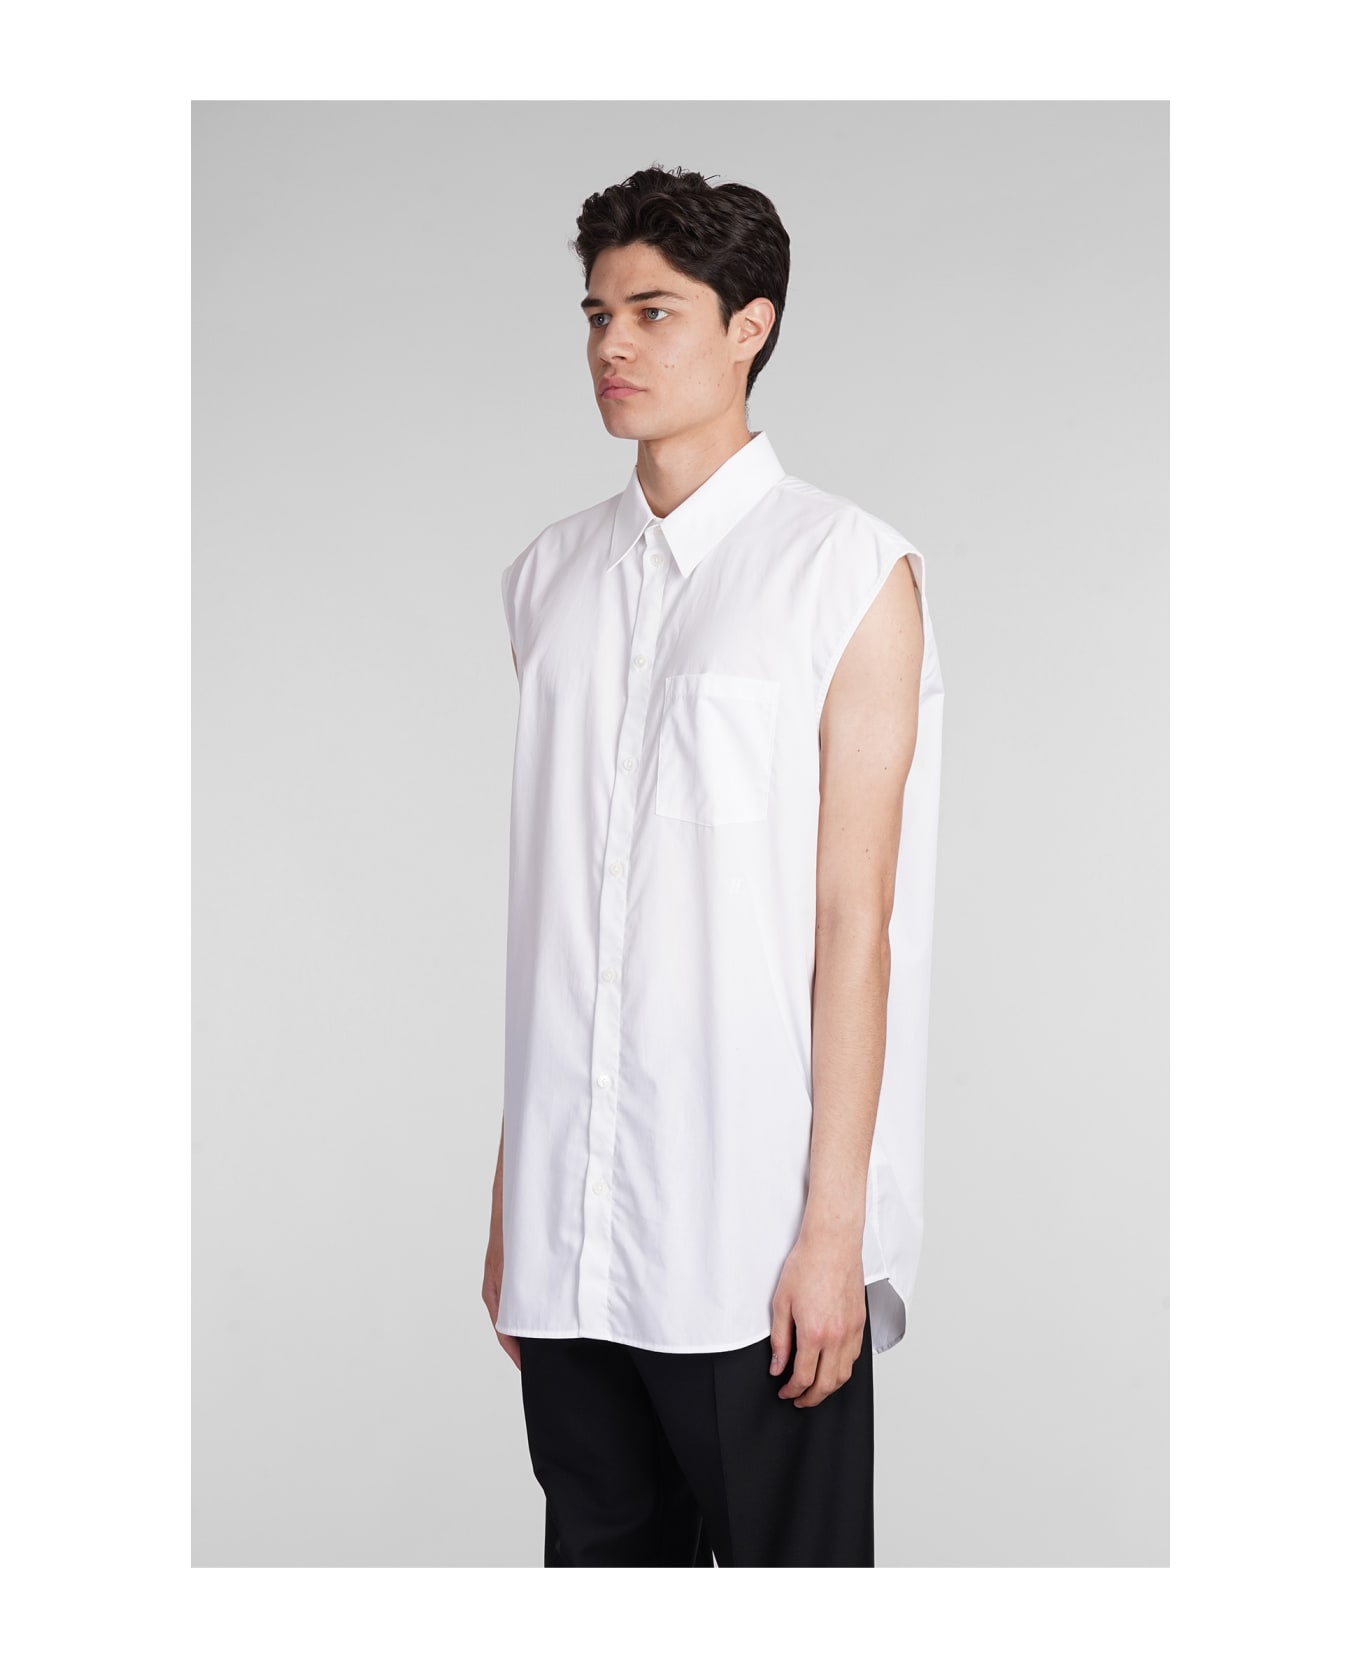 Helmut Lang Shirt In White Cotton - white